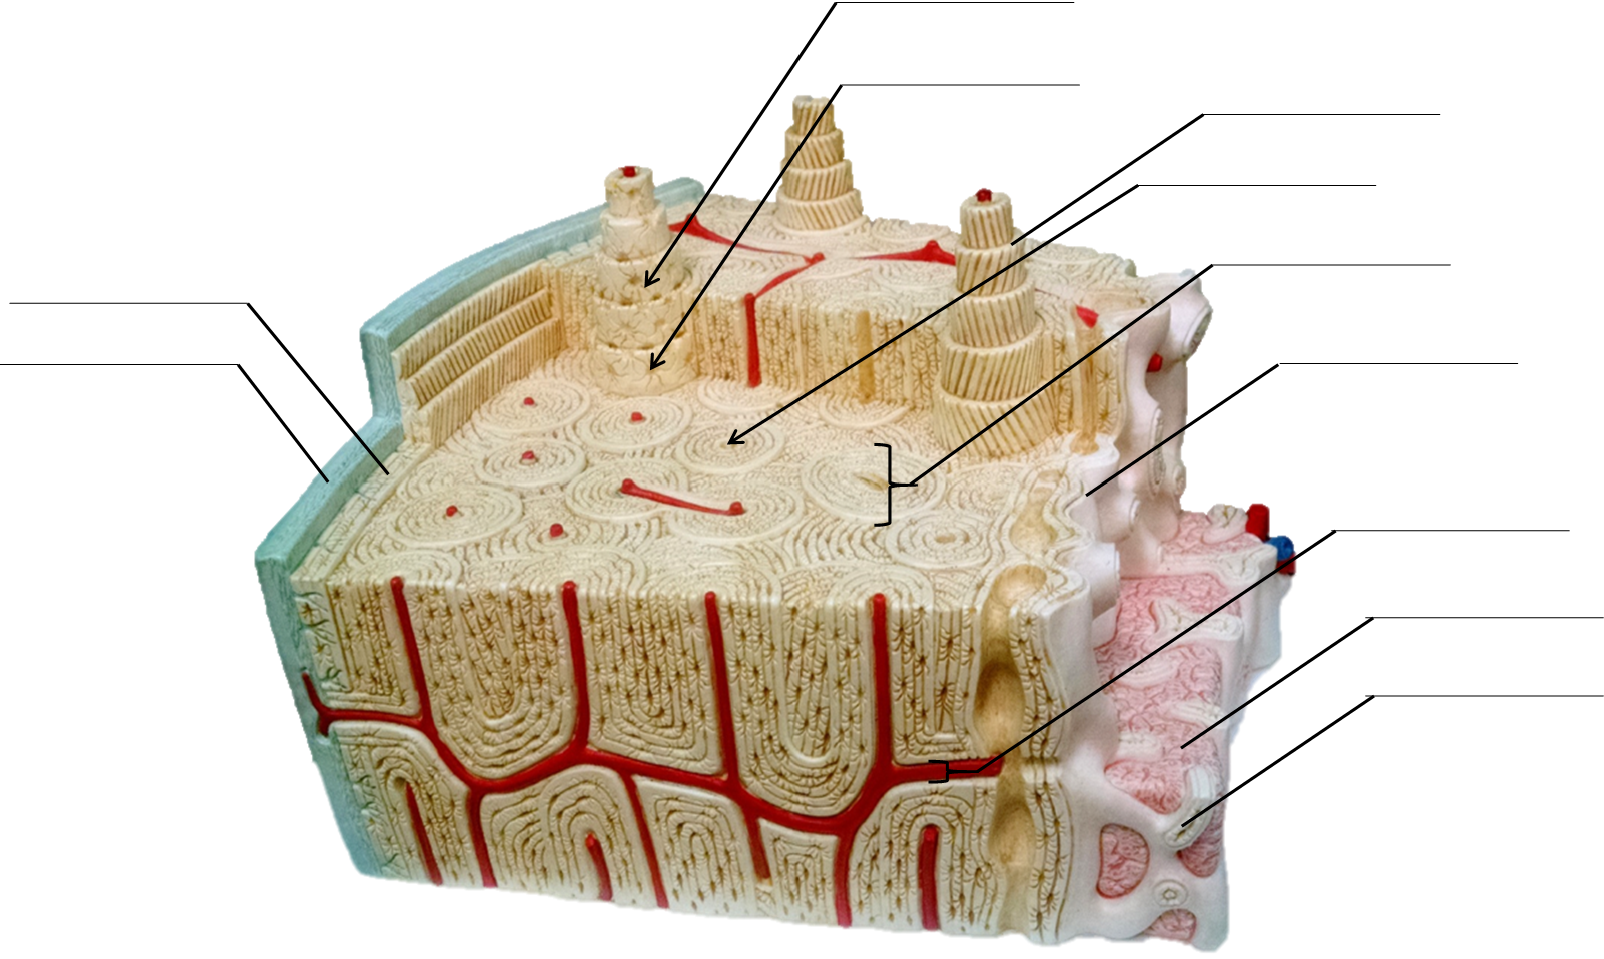 Anatomical model of bone tissue